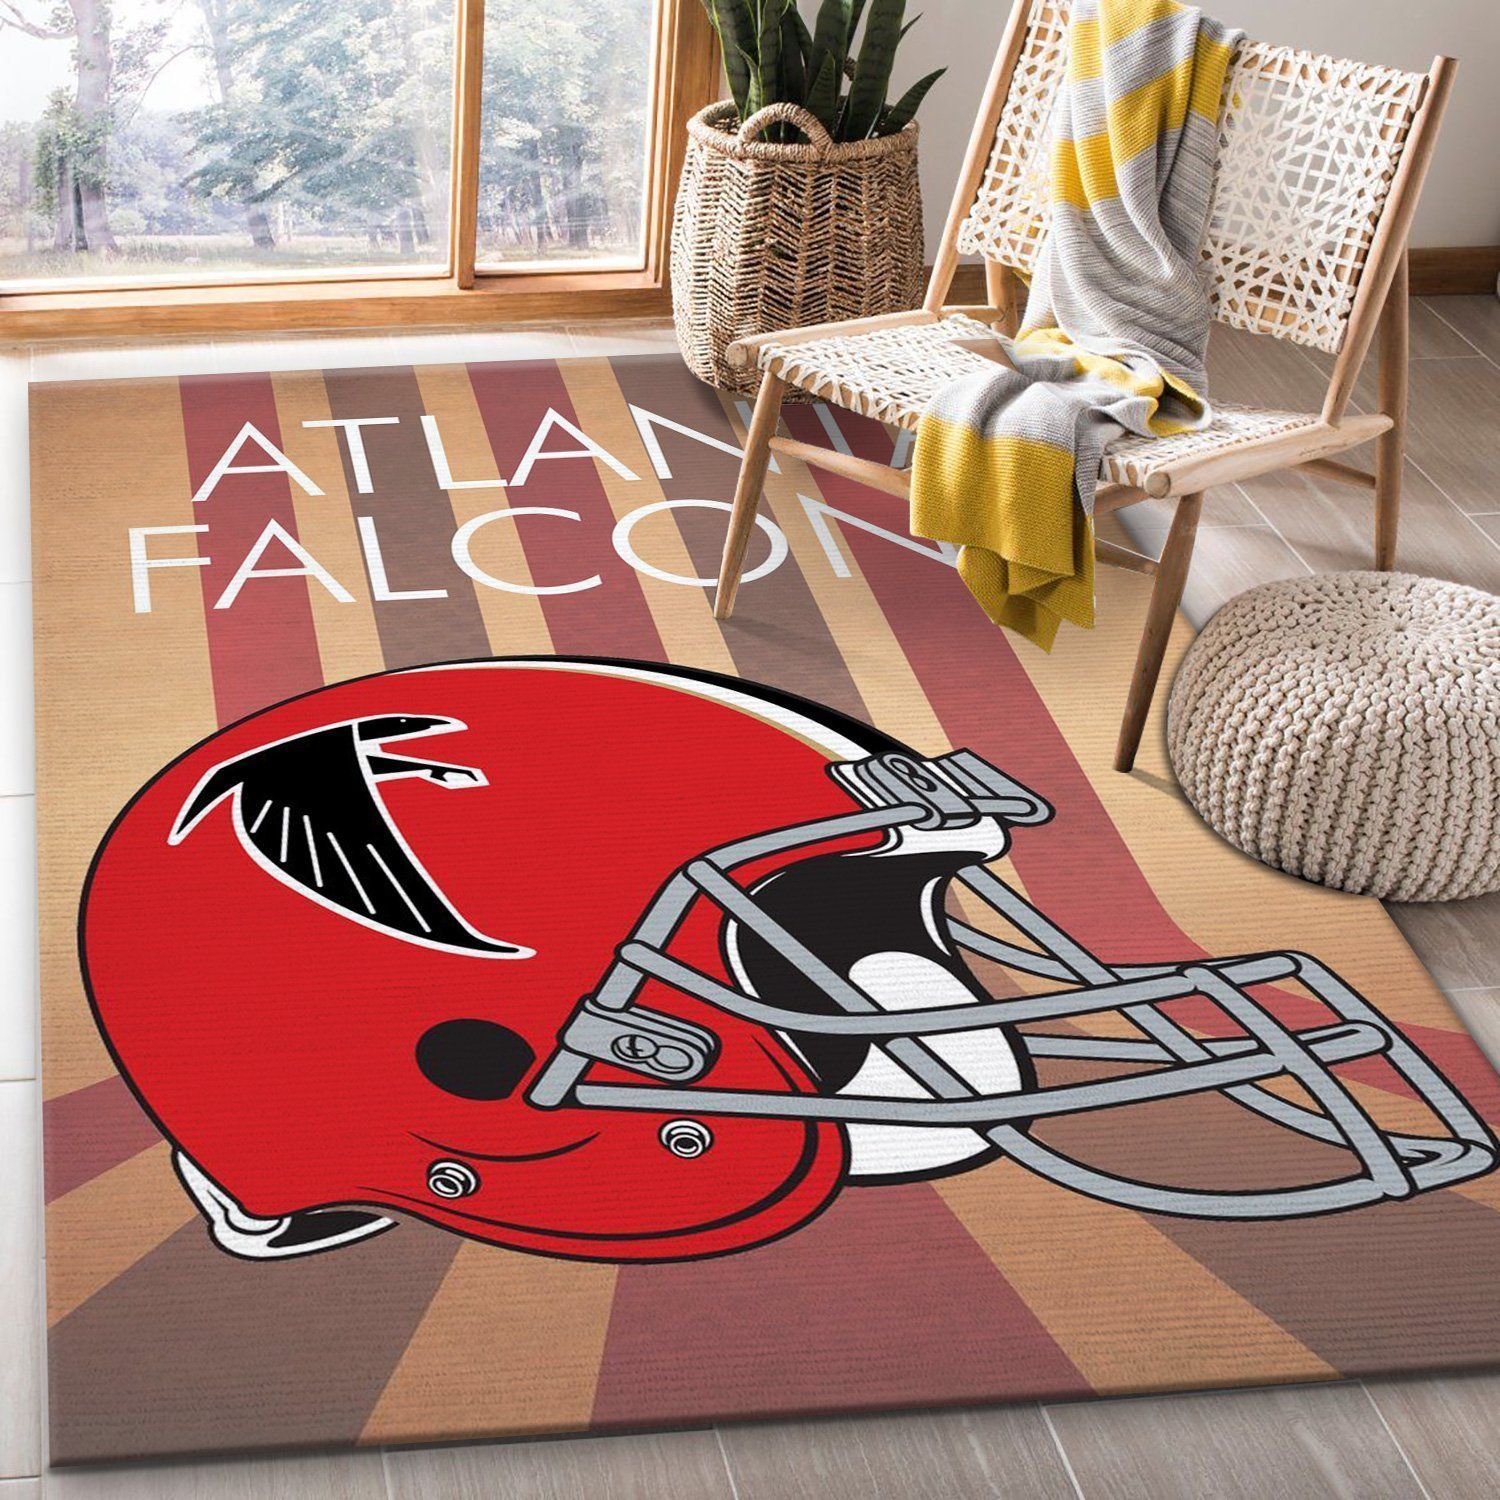 Atlanta Falcons Retro Nfl Area Rug Living Room Rug Home US Decor - Indoor Outdoor Rugs